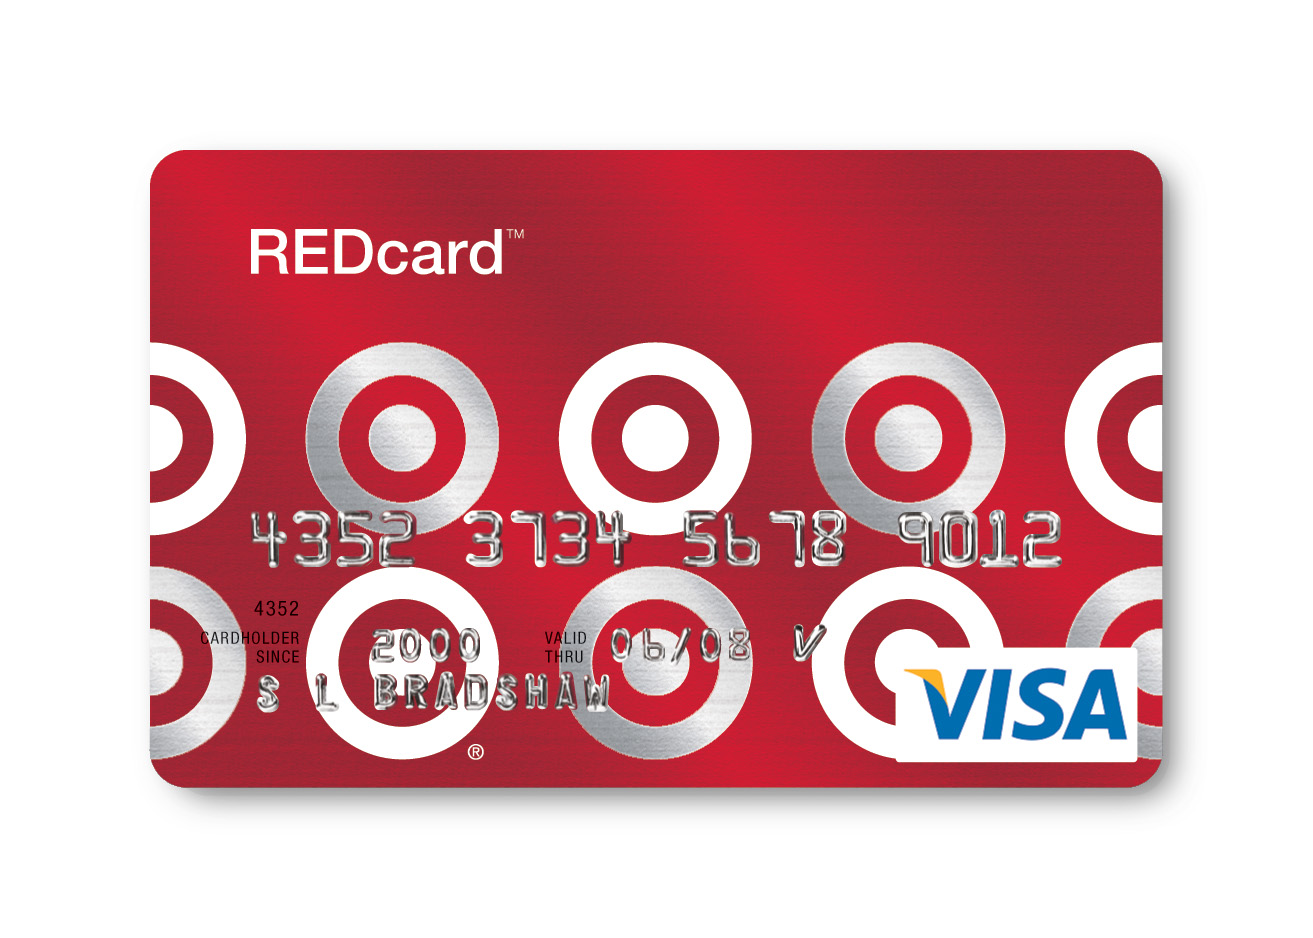 redcard credit card